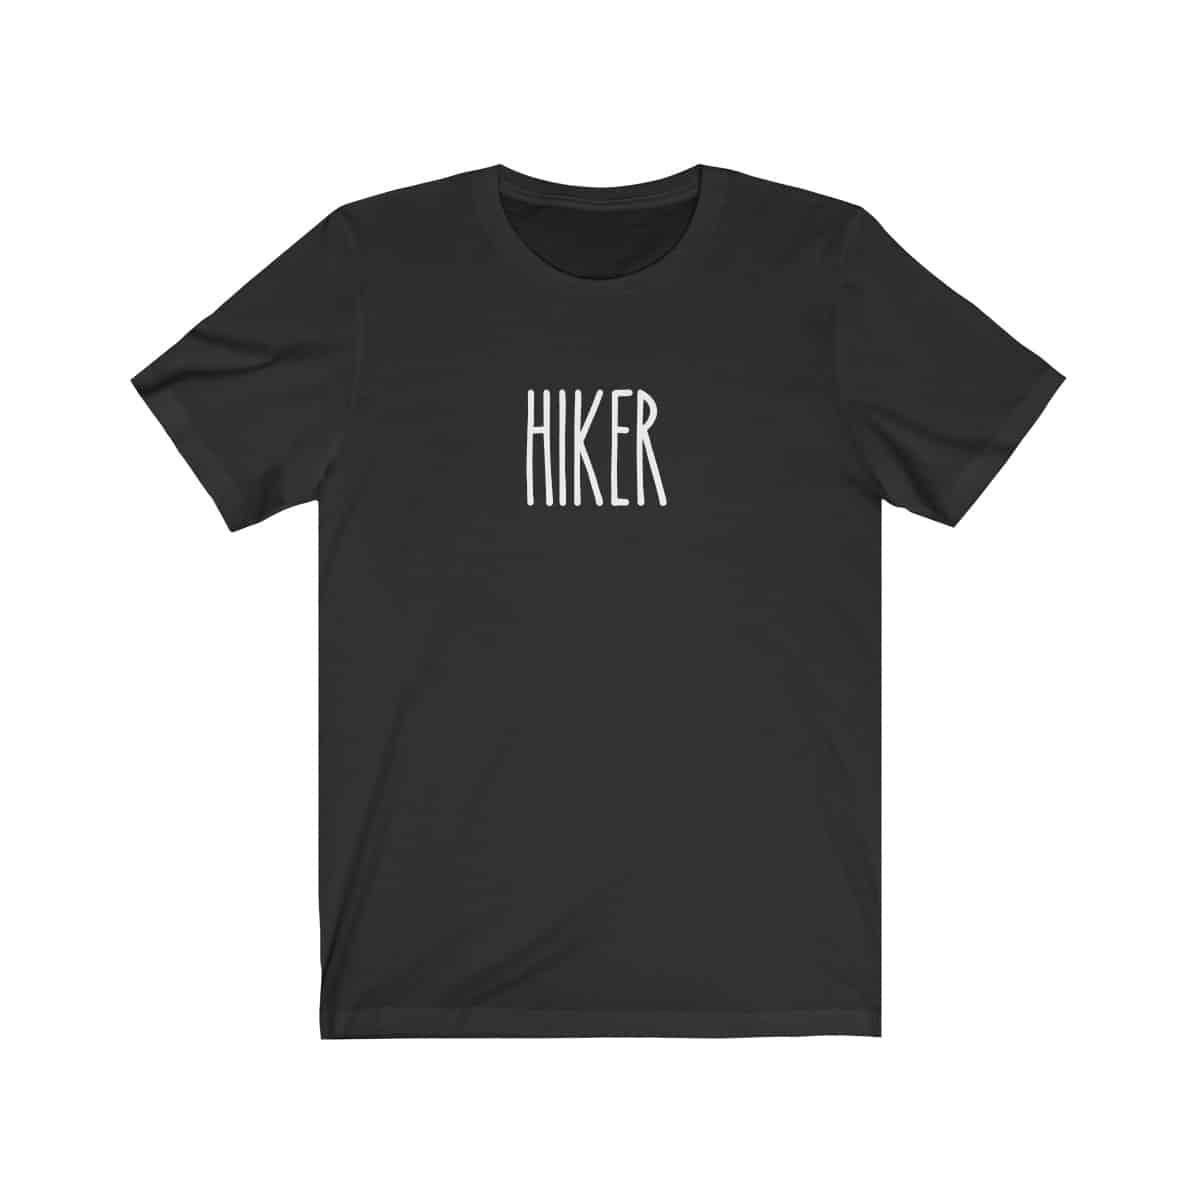 HIKER vintage black shirt - Campfires & Coffee